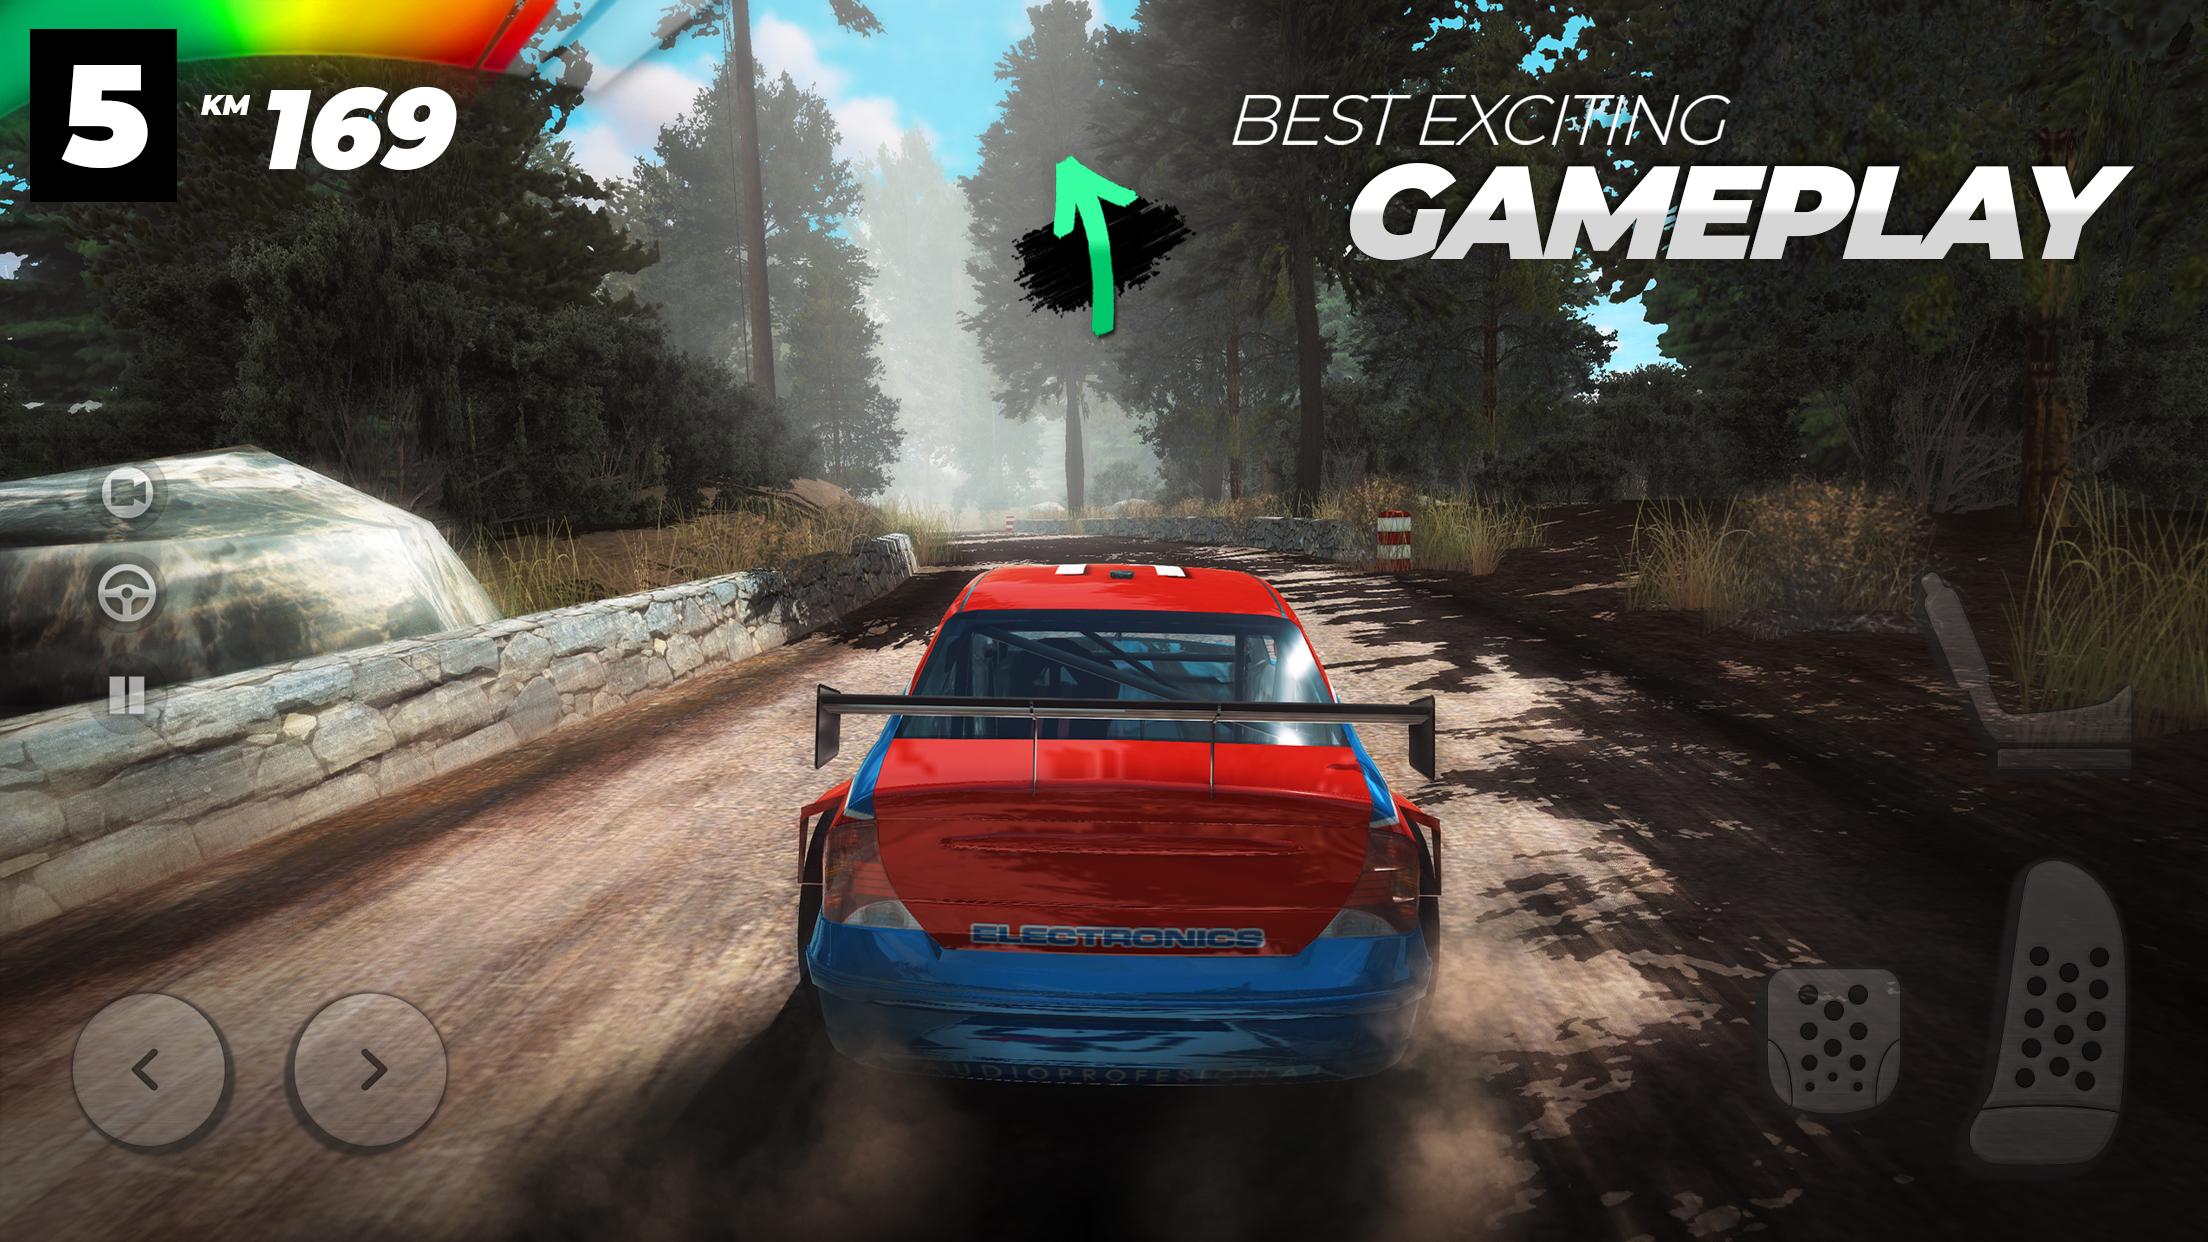 Real Drift Car Racing – Drifted Games